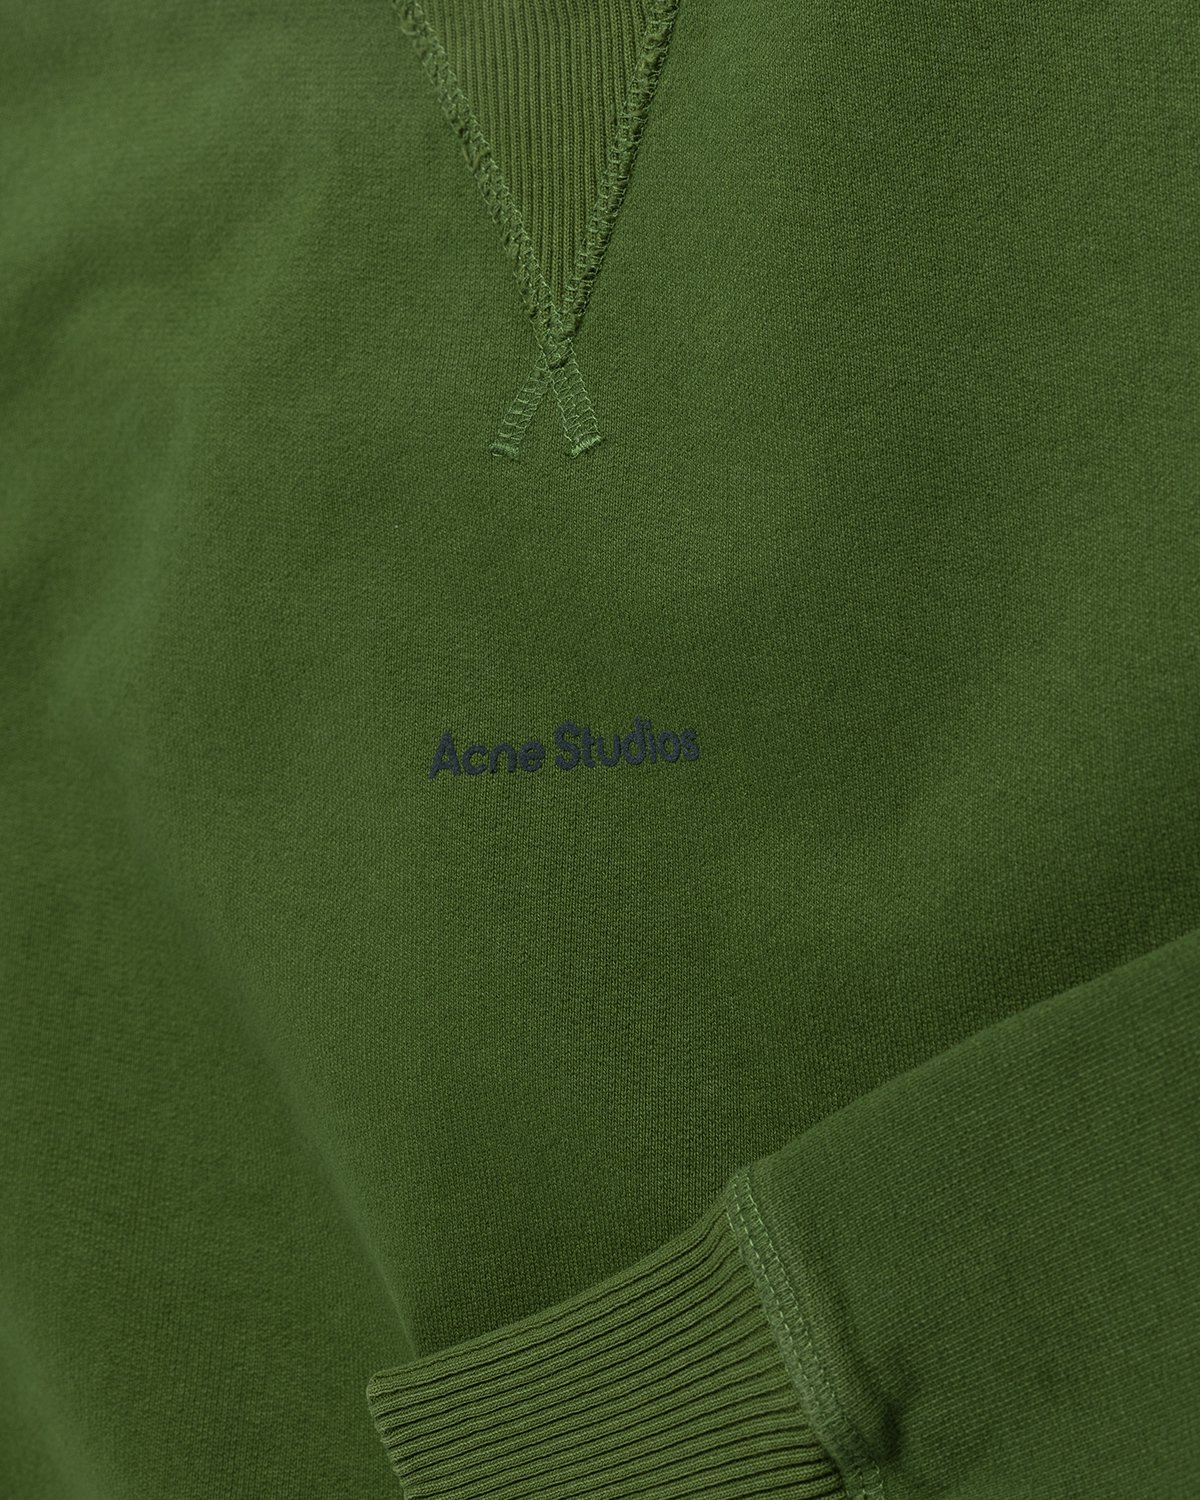 Acne Studios - Organic Cotton Crewneck Sweatshirt Bottle Green - Clothing - Green - Image 3